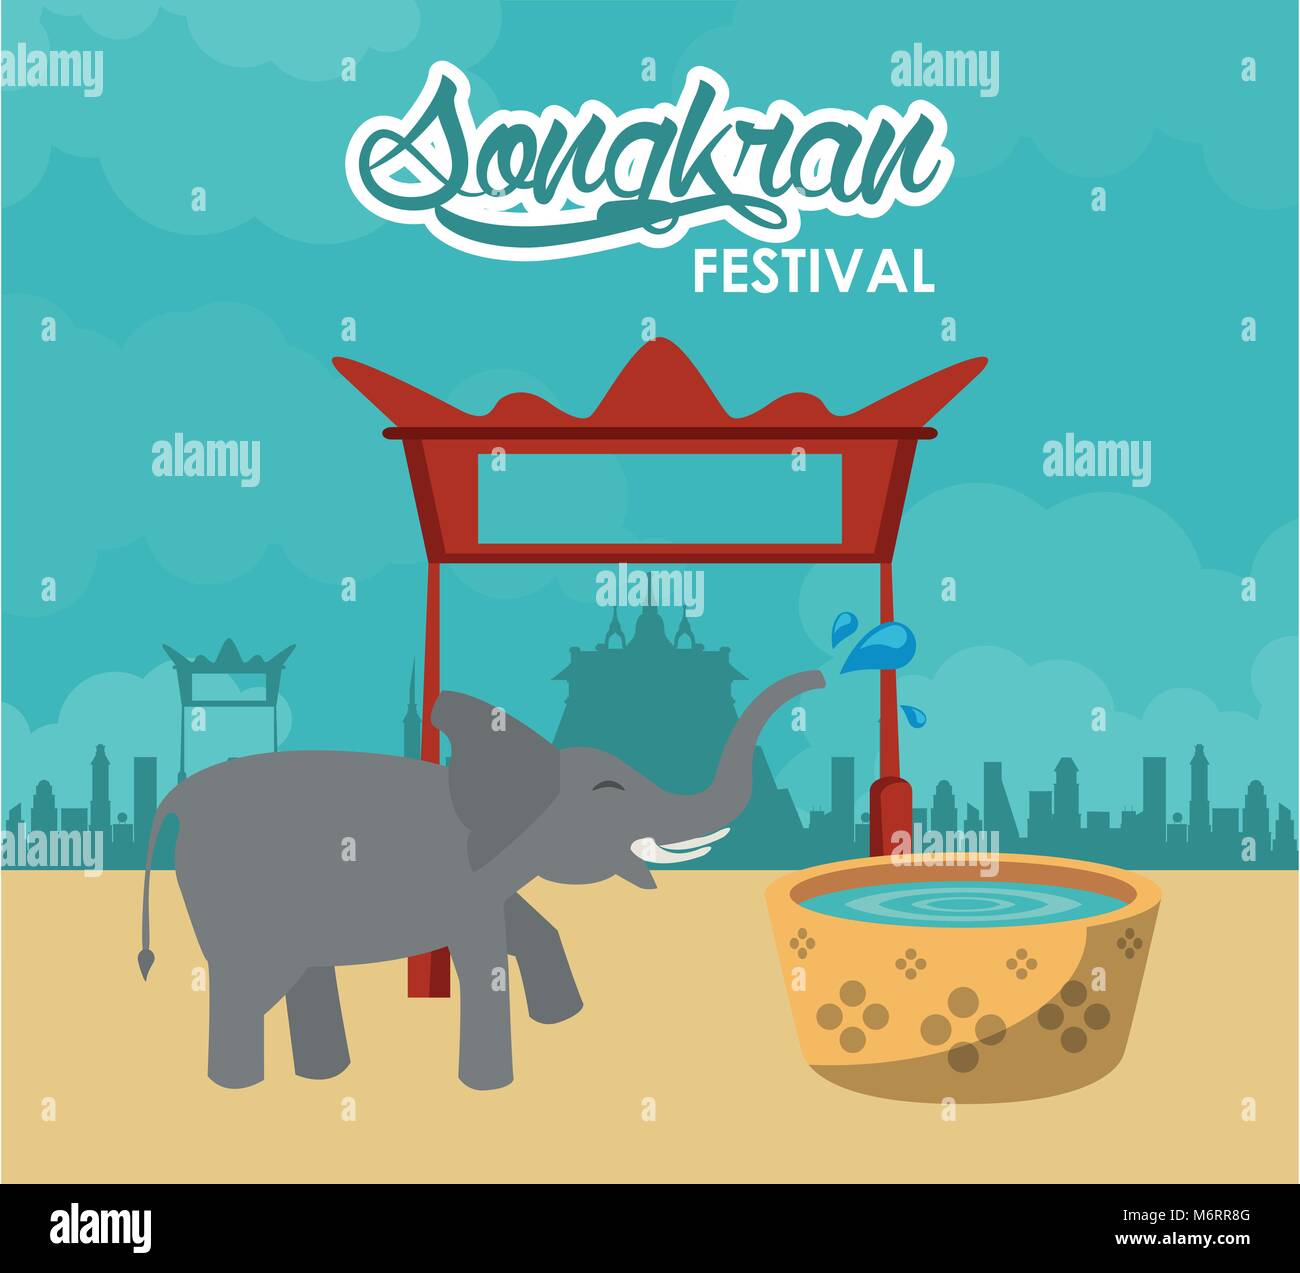 Songkran Festival Card Vector Illustration Graphic Design Stock Vector Image And Art Alamy